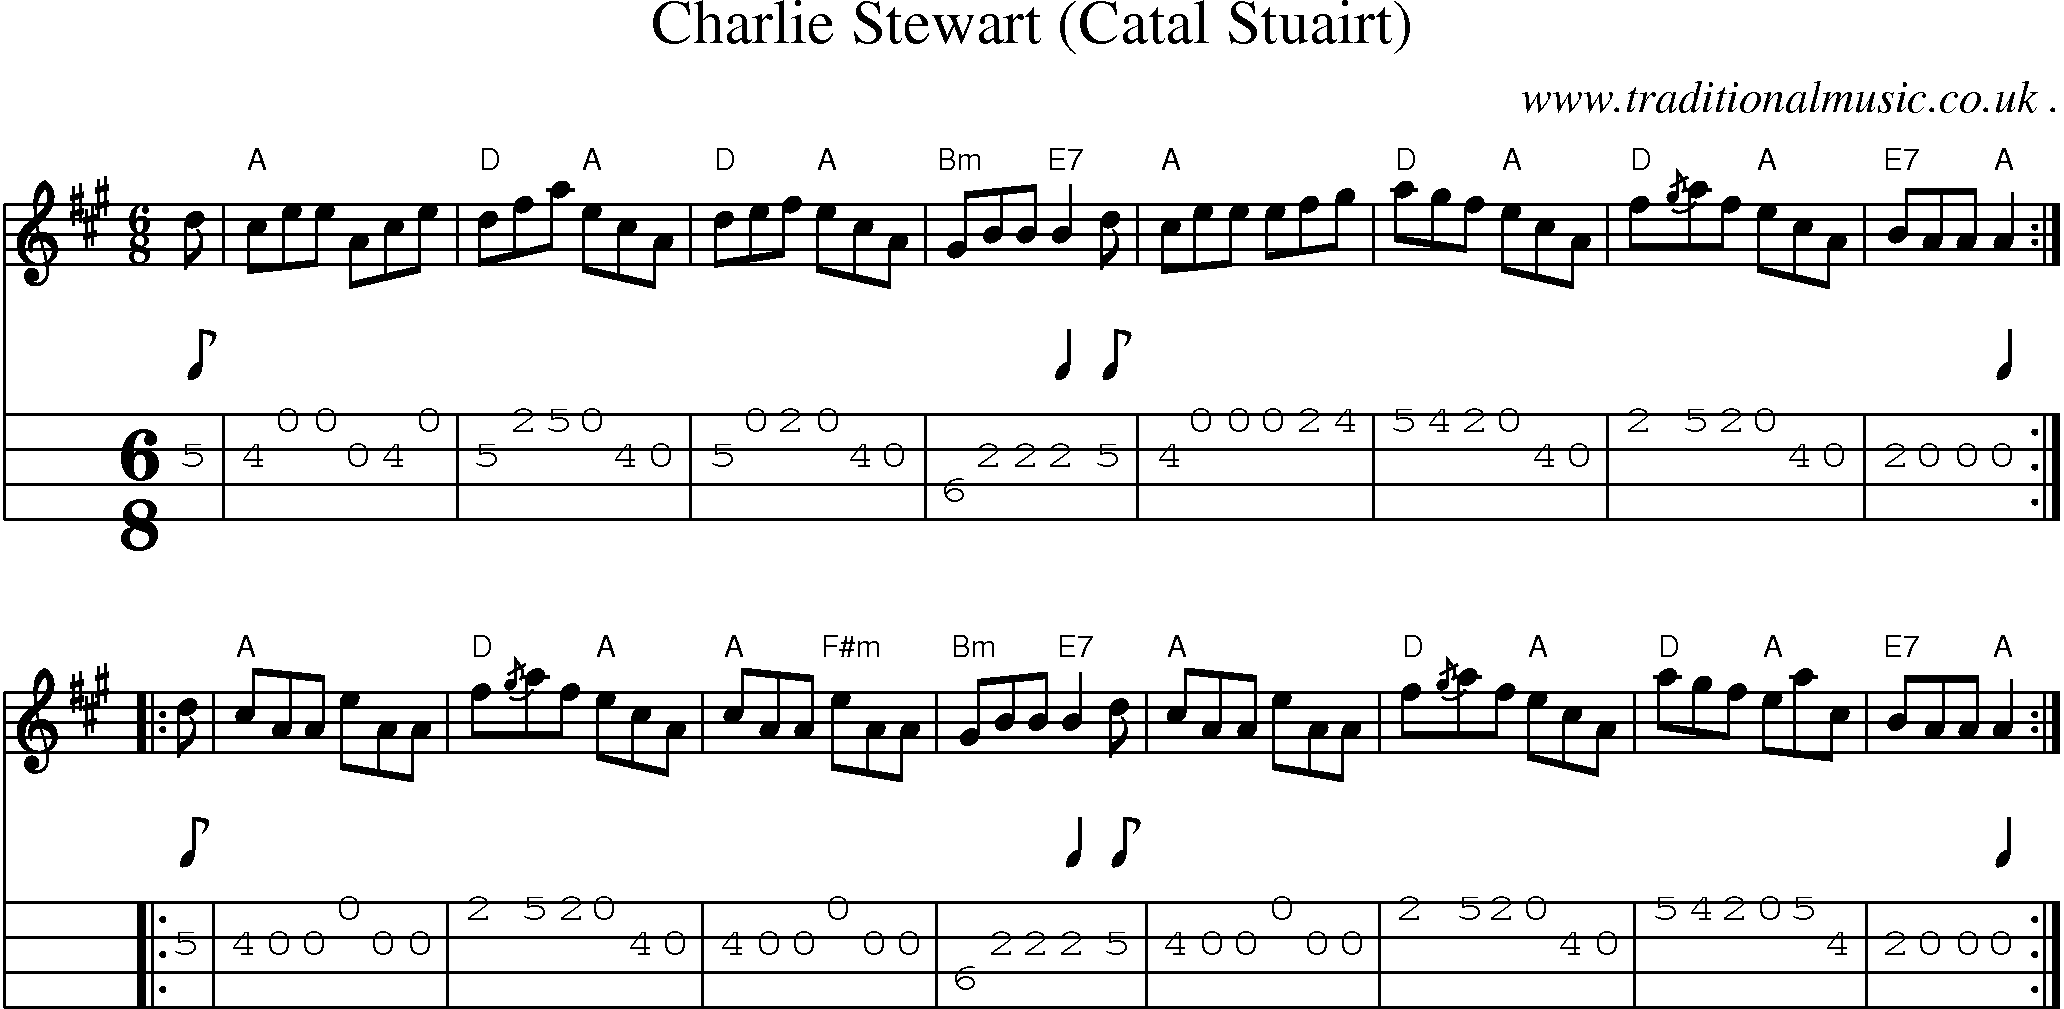 Sheet-music  score, Chords and Mandolin Tabs for Charlie Stewart Catal Stuairt